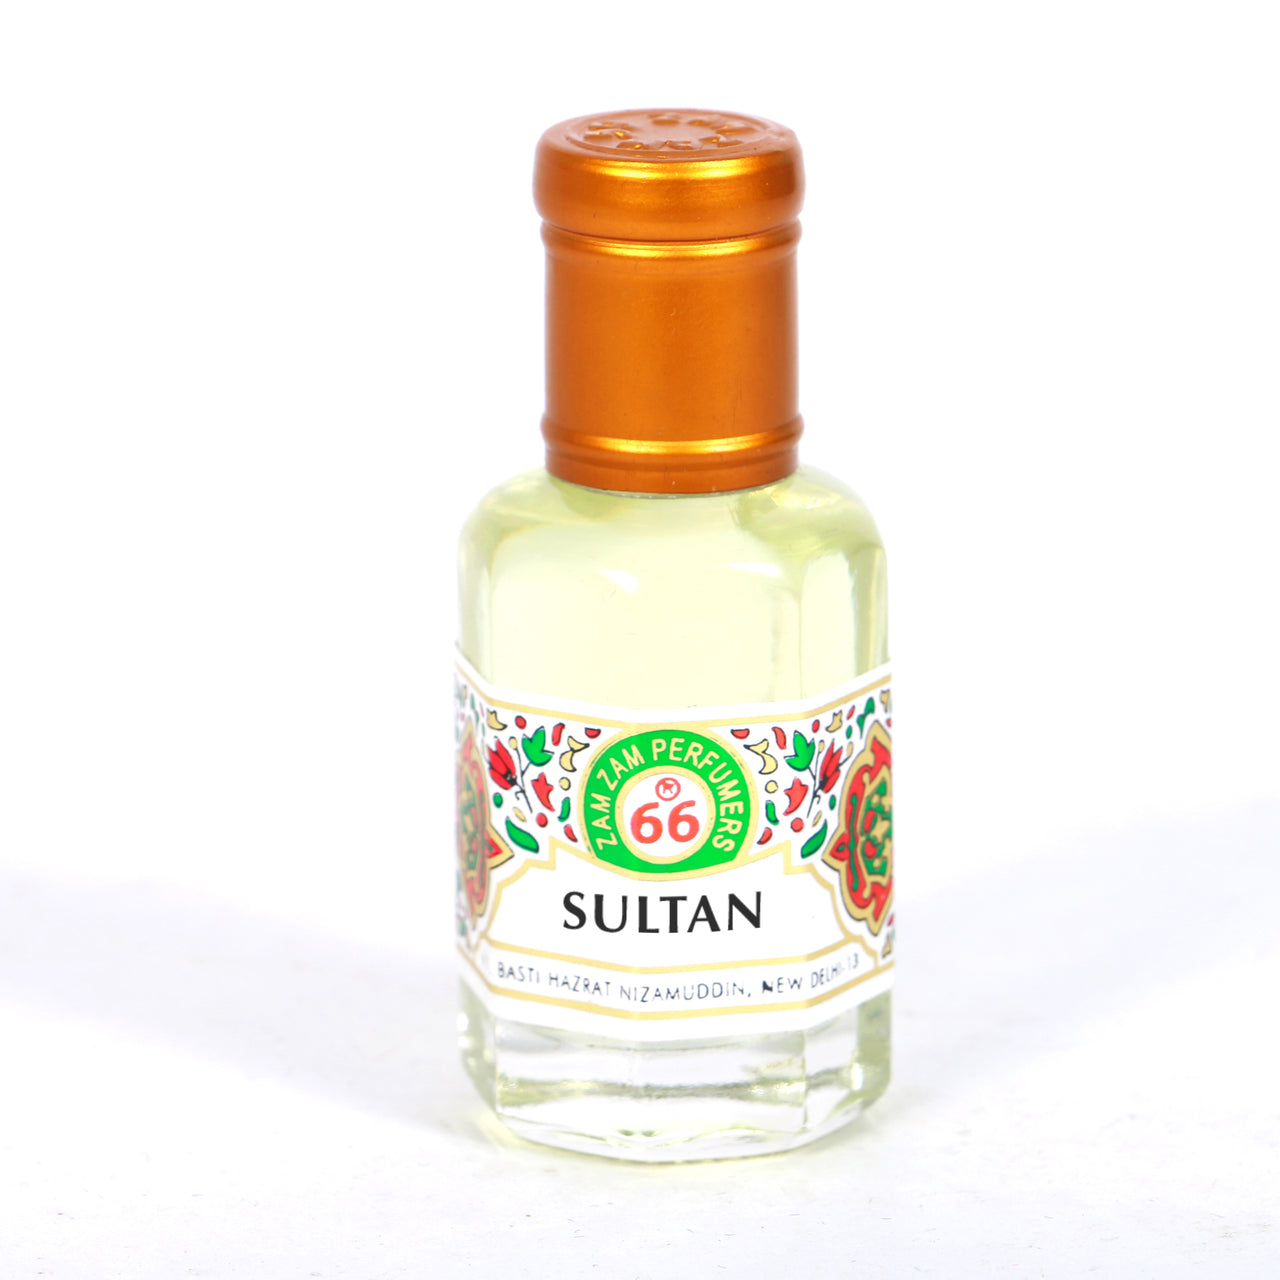 Sultan Attar Perfume 